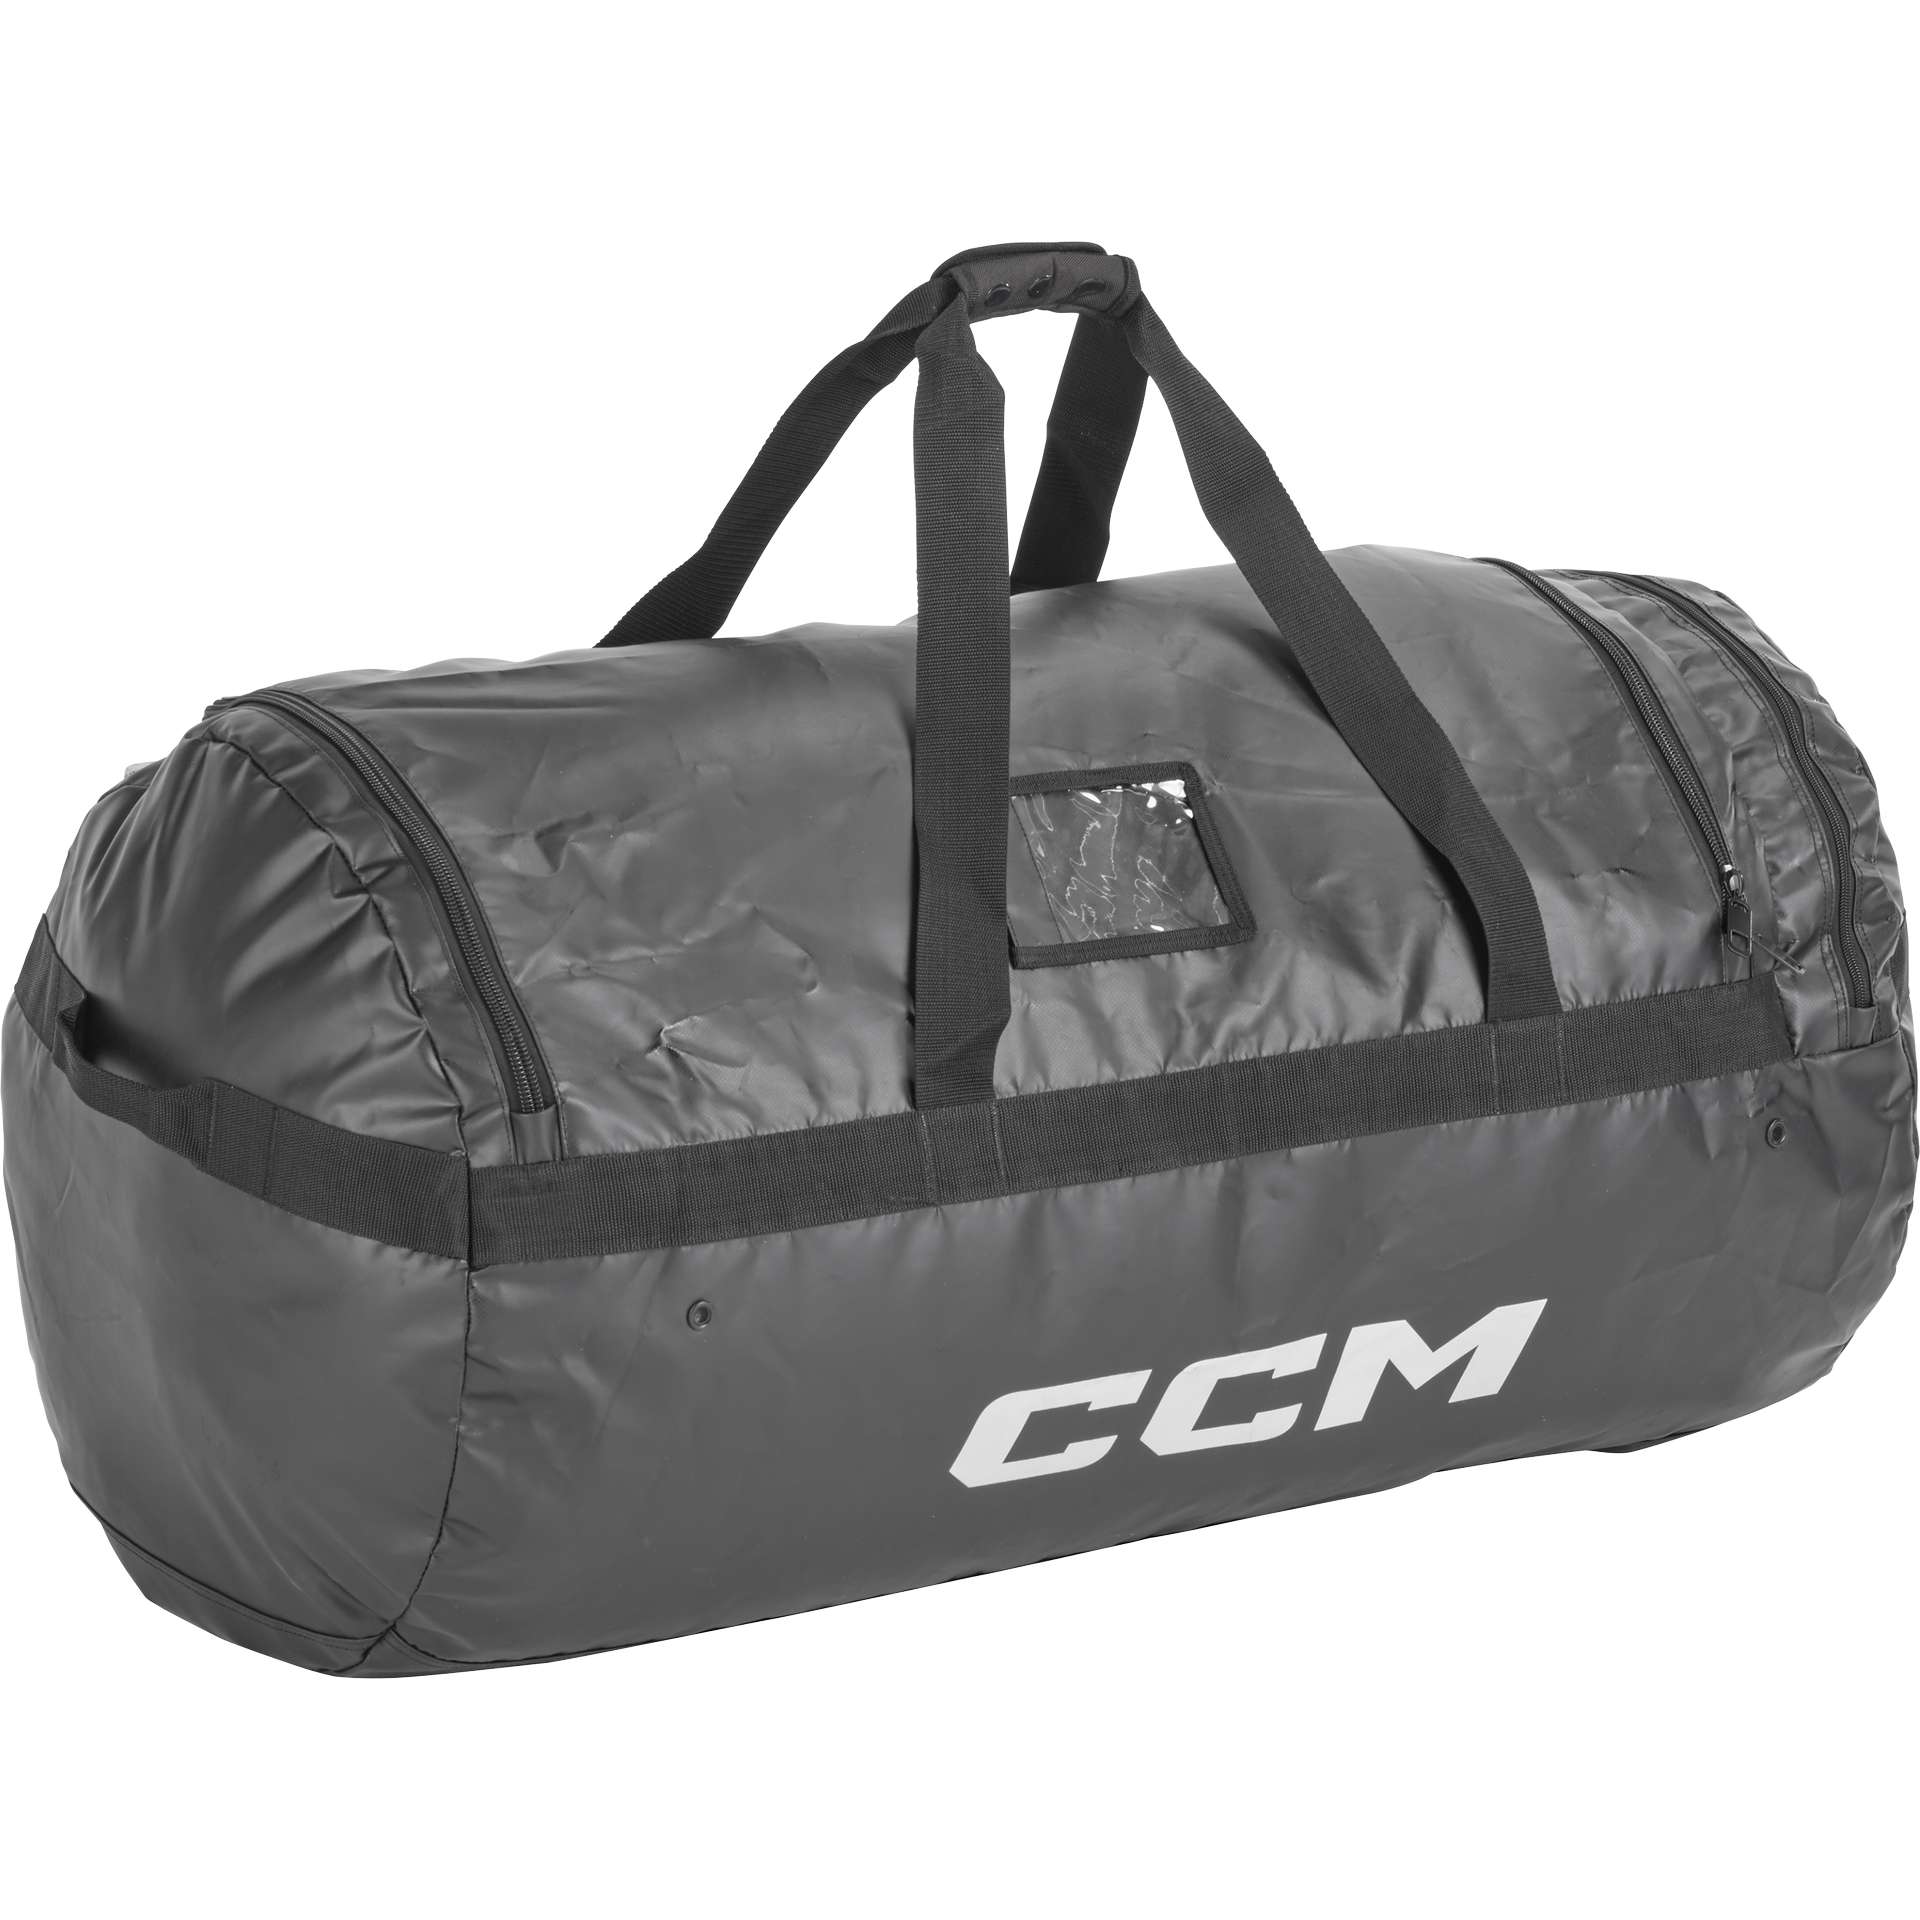 CCM 450 Deluxe Carry Bag Sr.